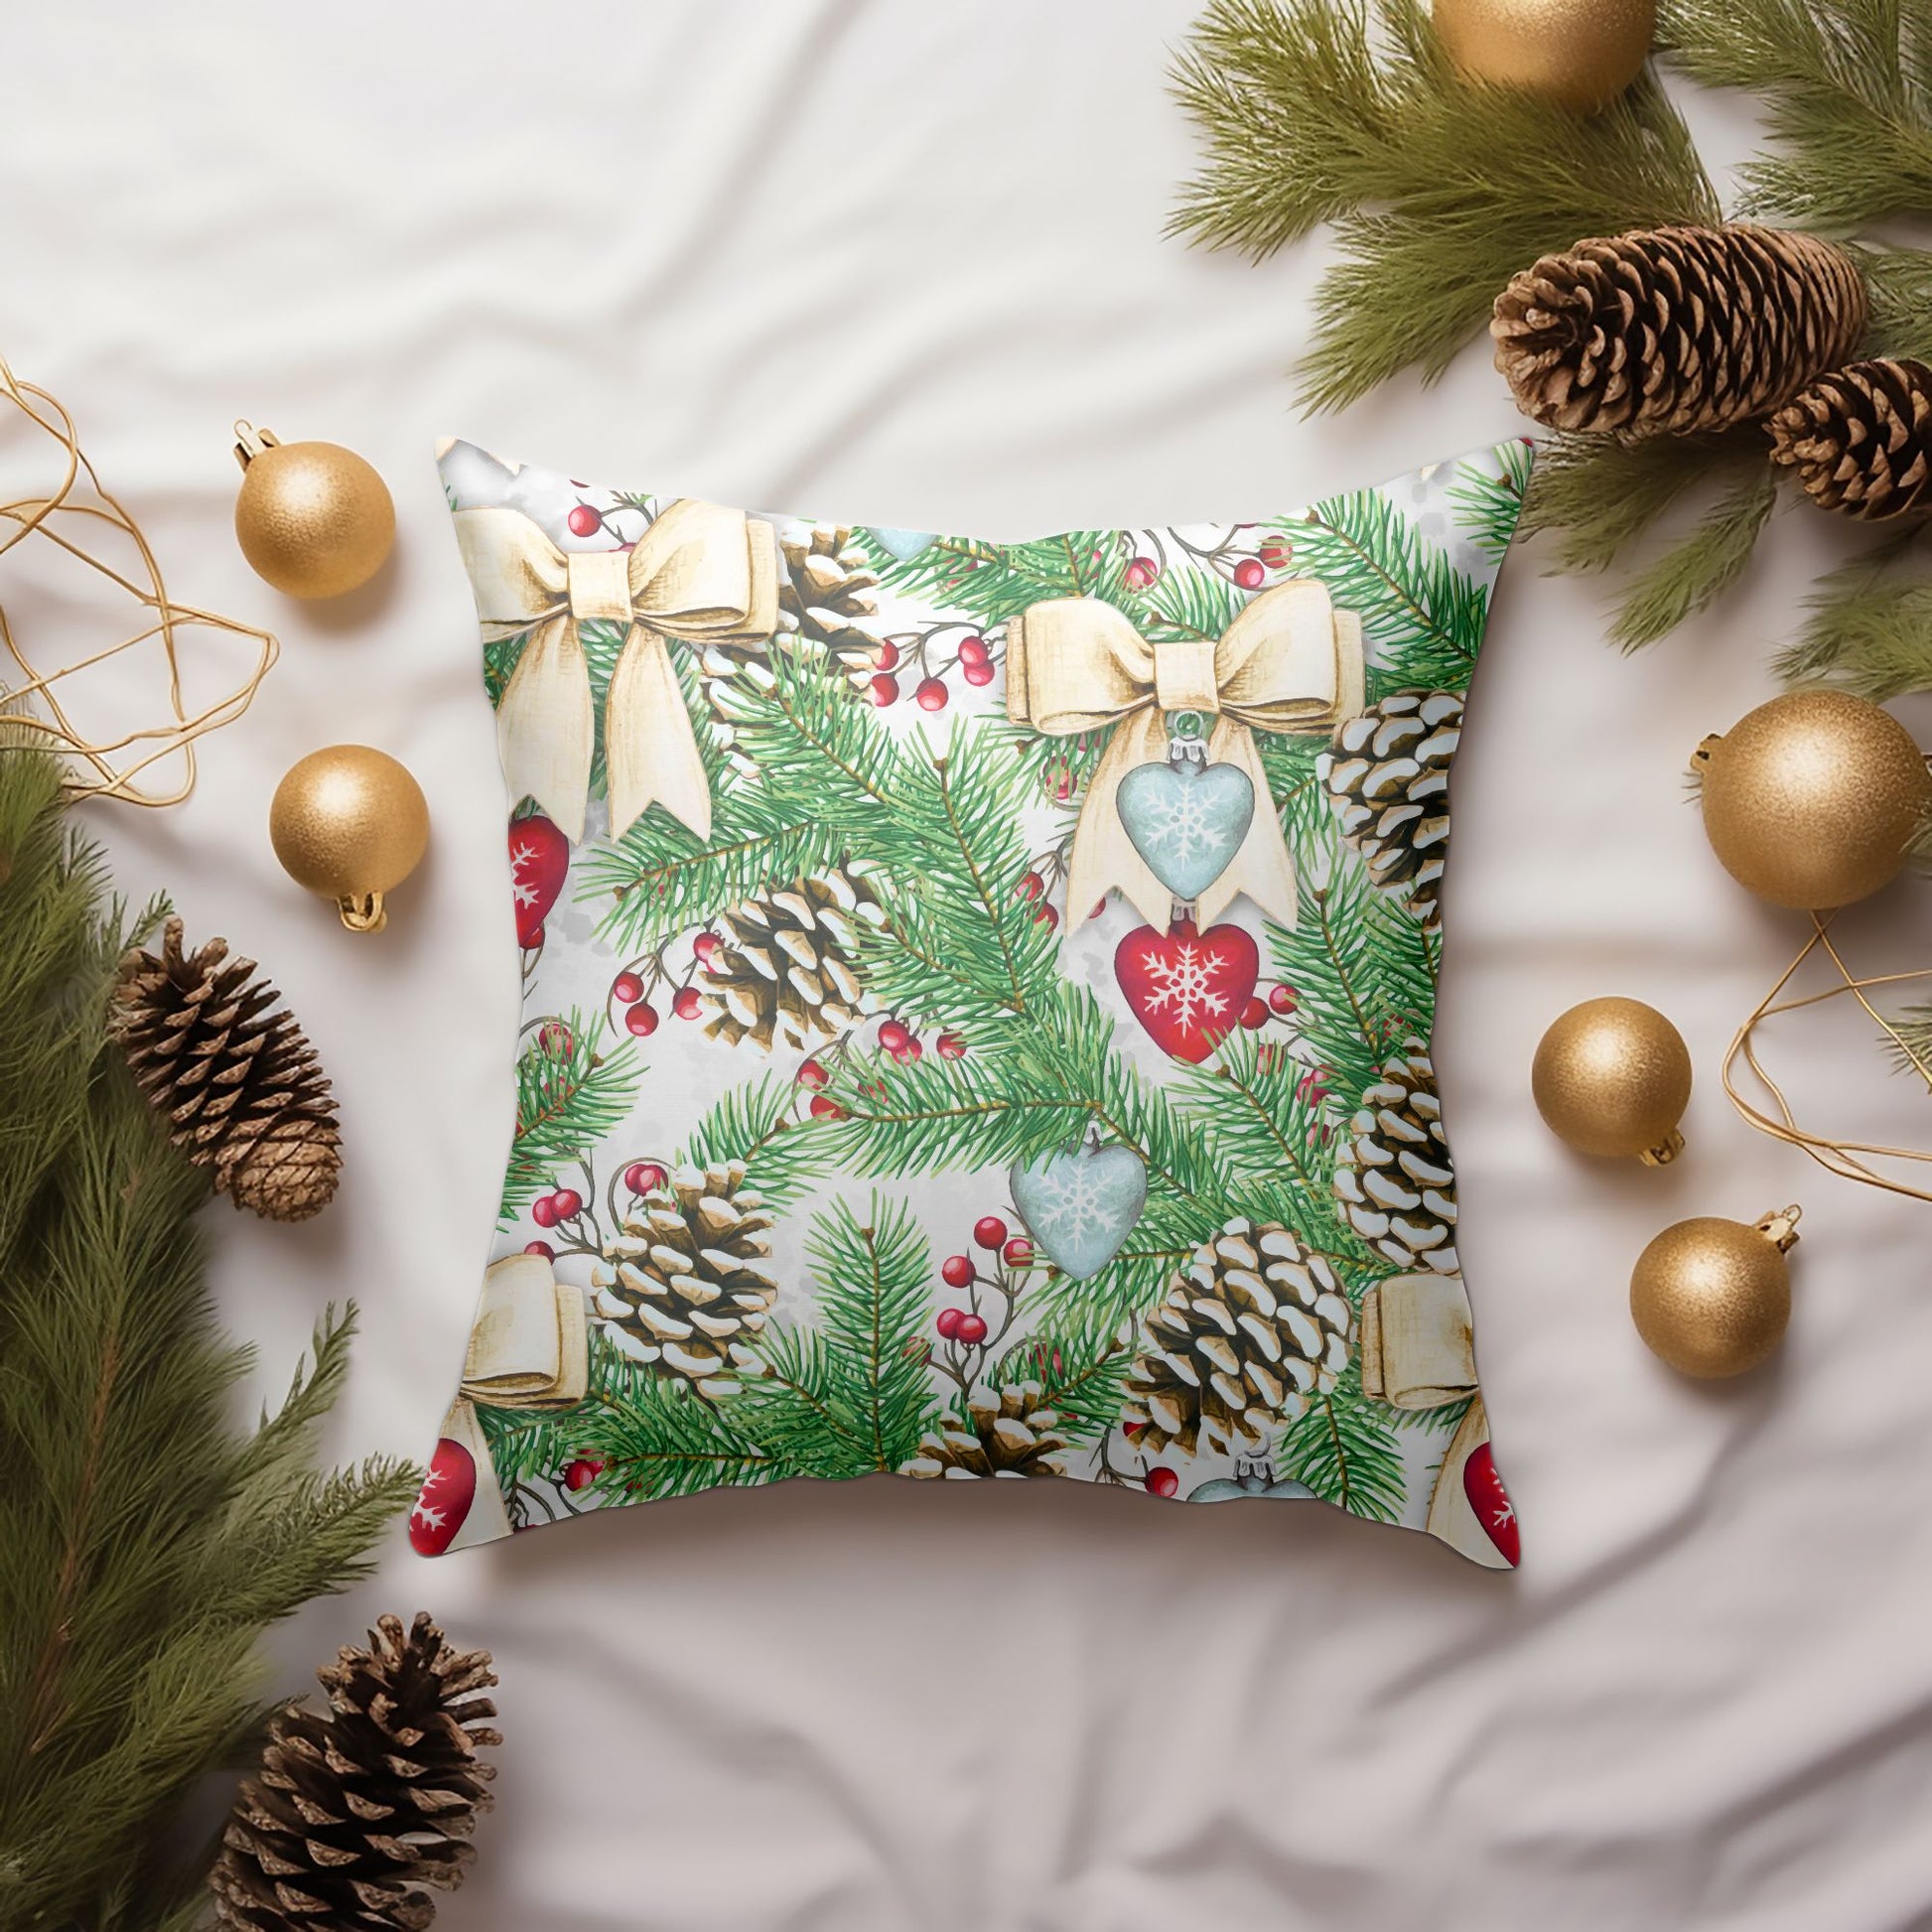 Whimsical Green Christmas Illustration on the Pillow